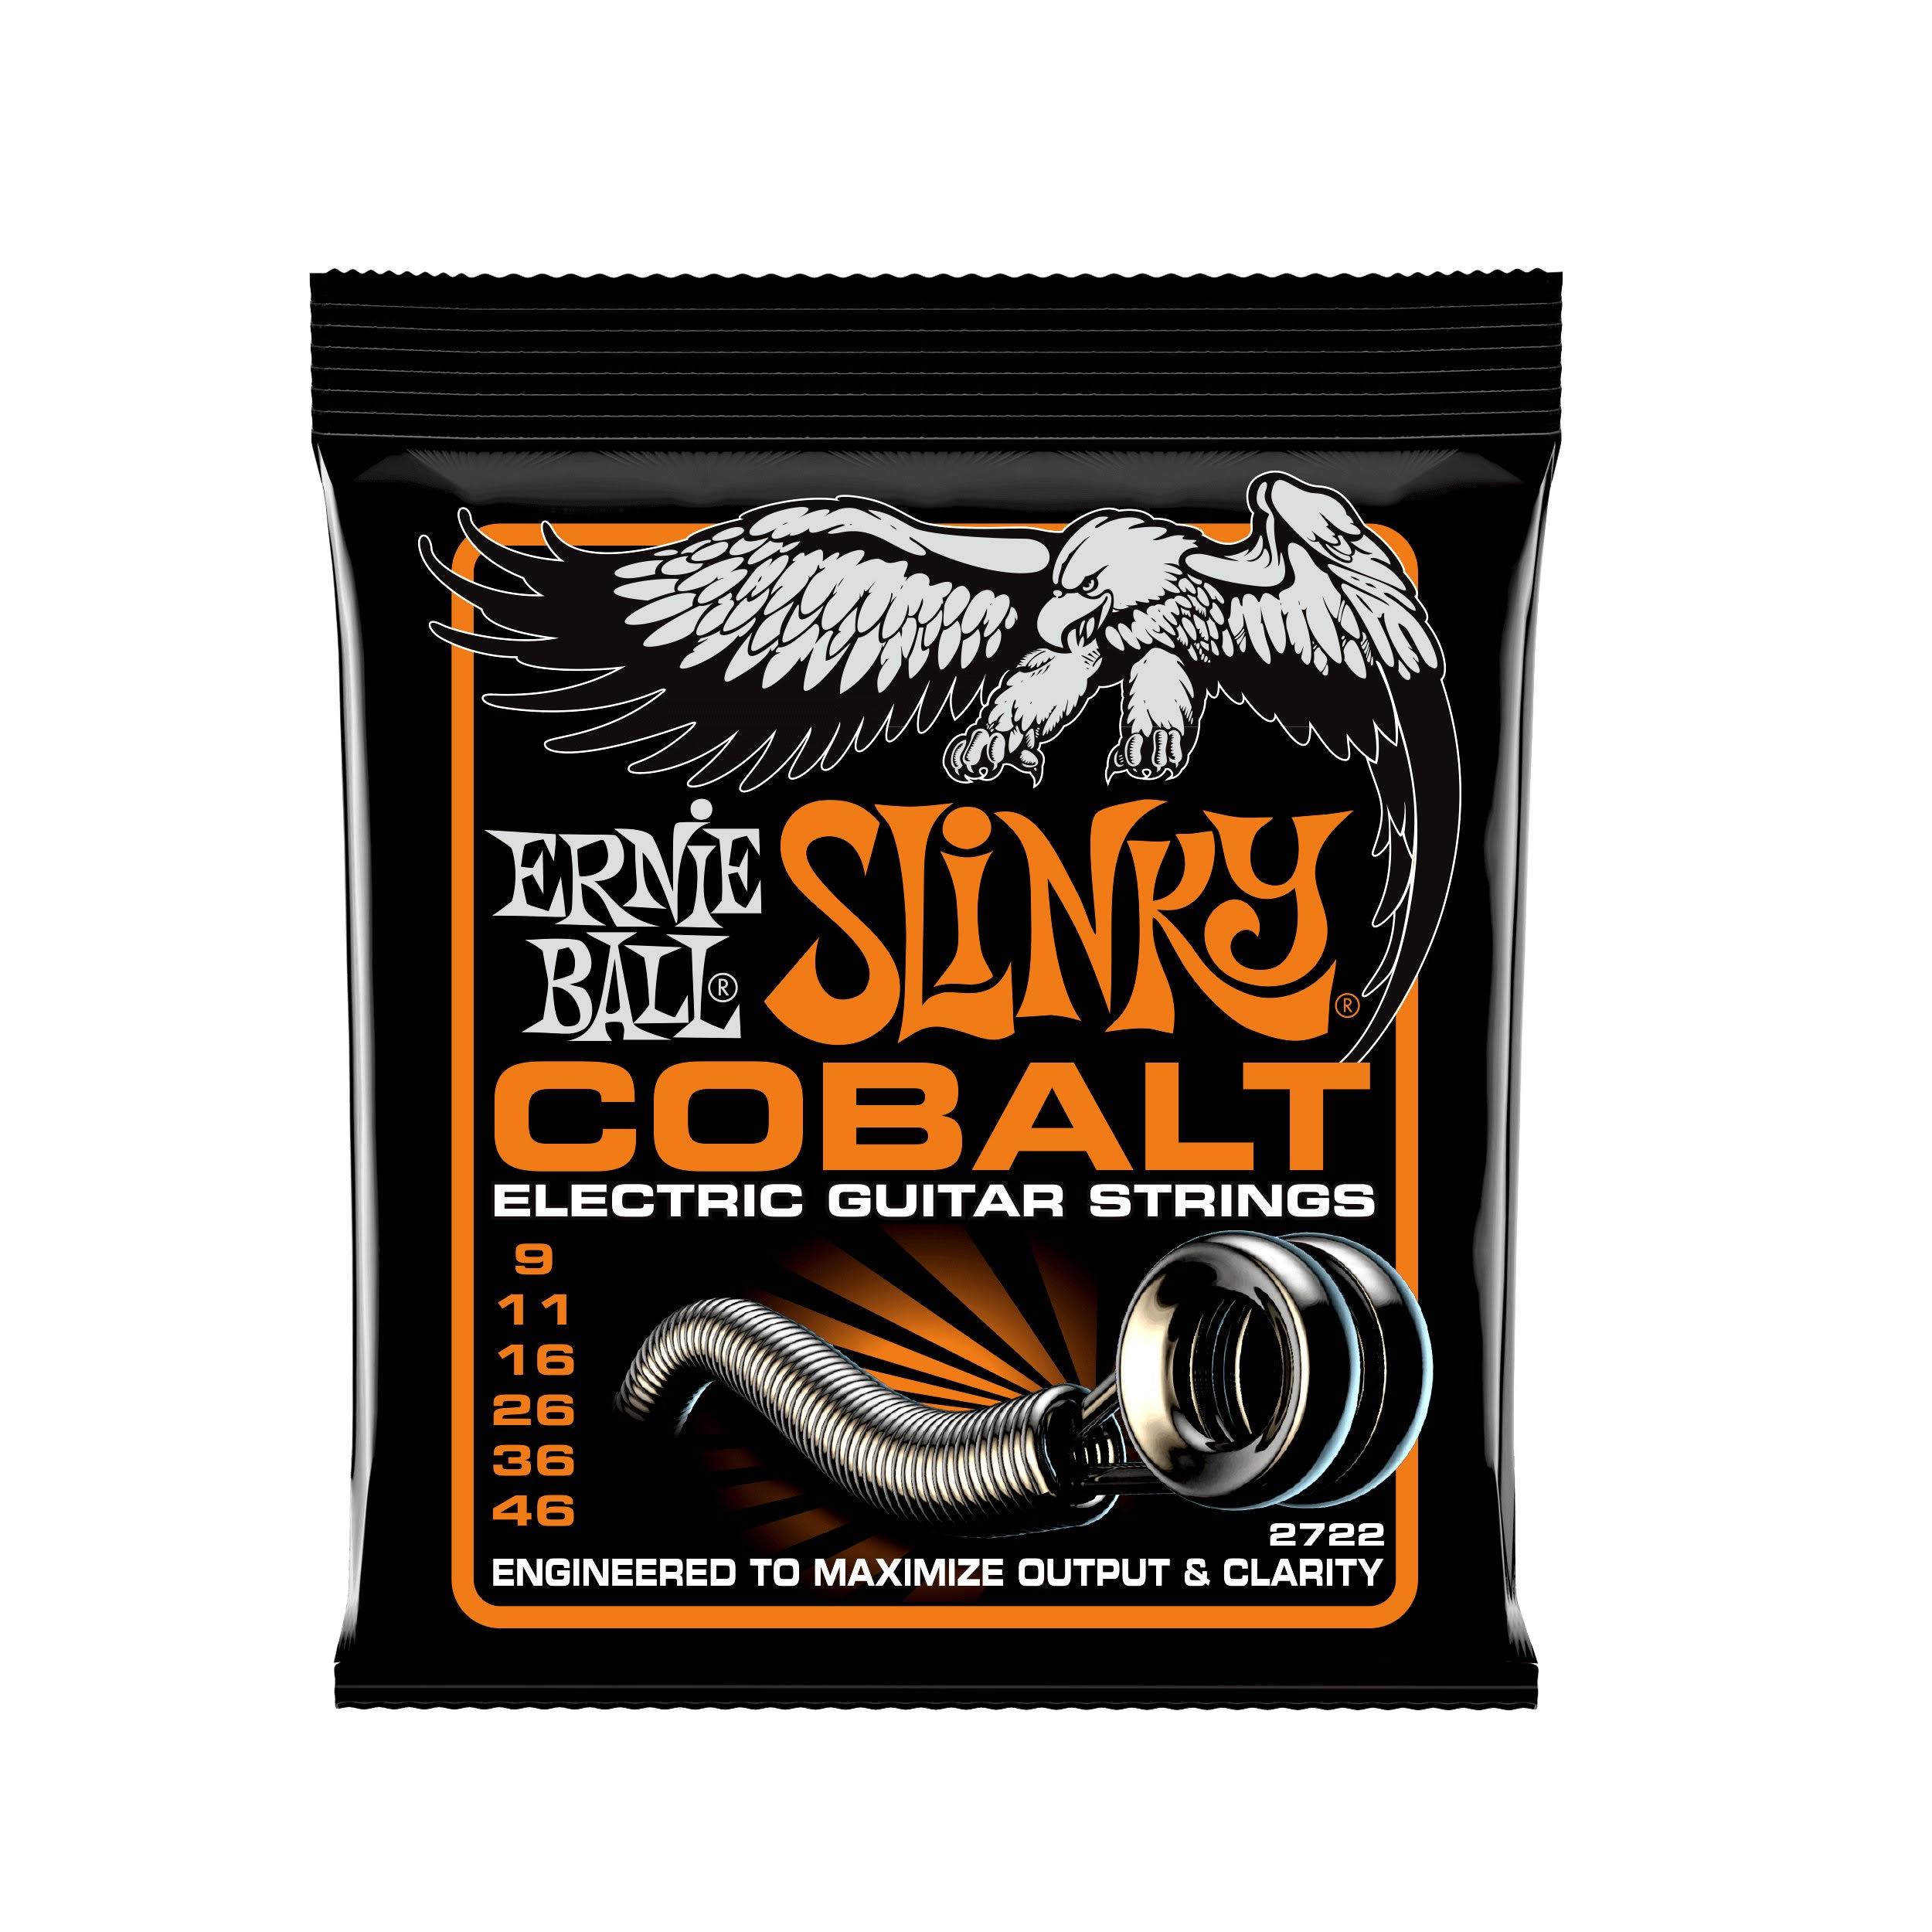 Ernie Ball Slinky Cobalt Electric Guitar Strings - .090-.046, Single Set